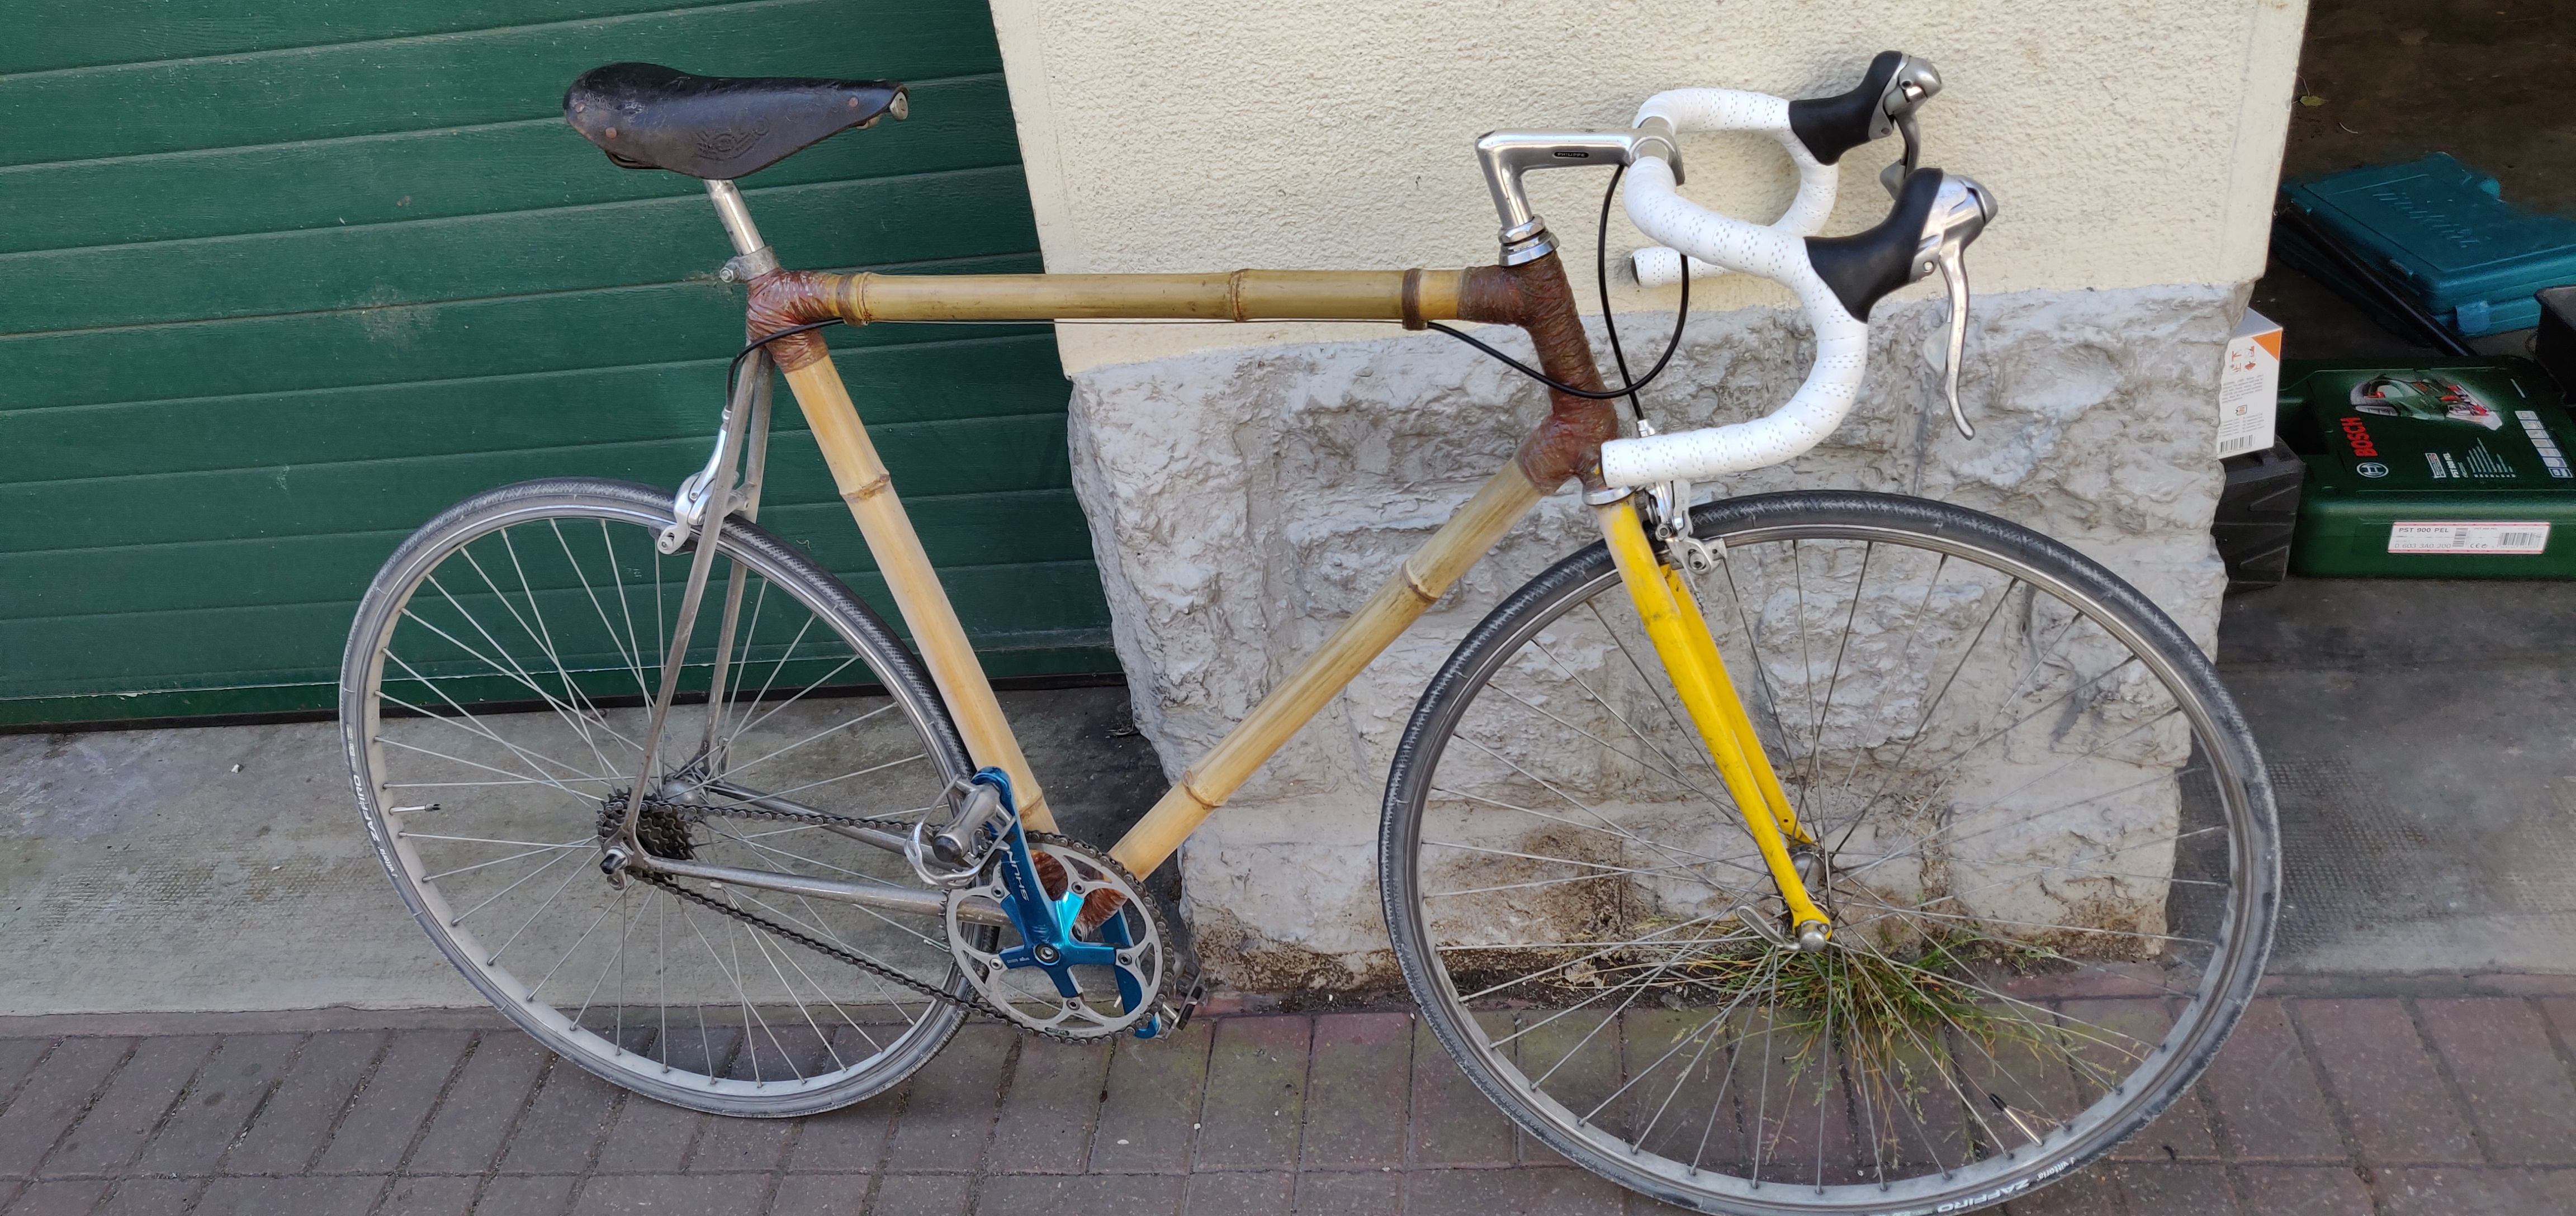 My very own bamboo bike!